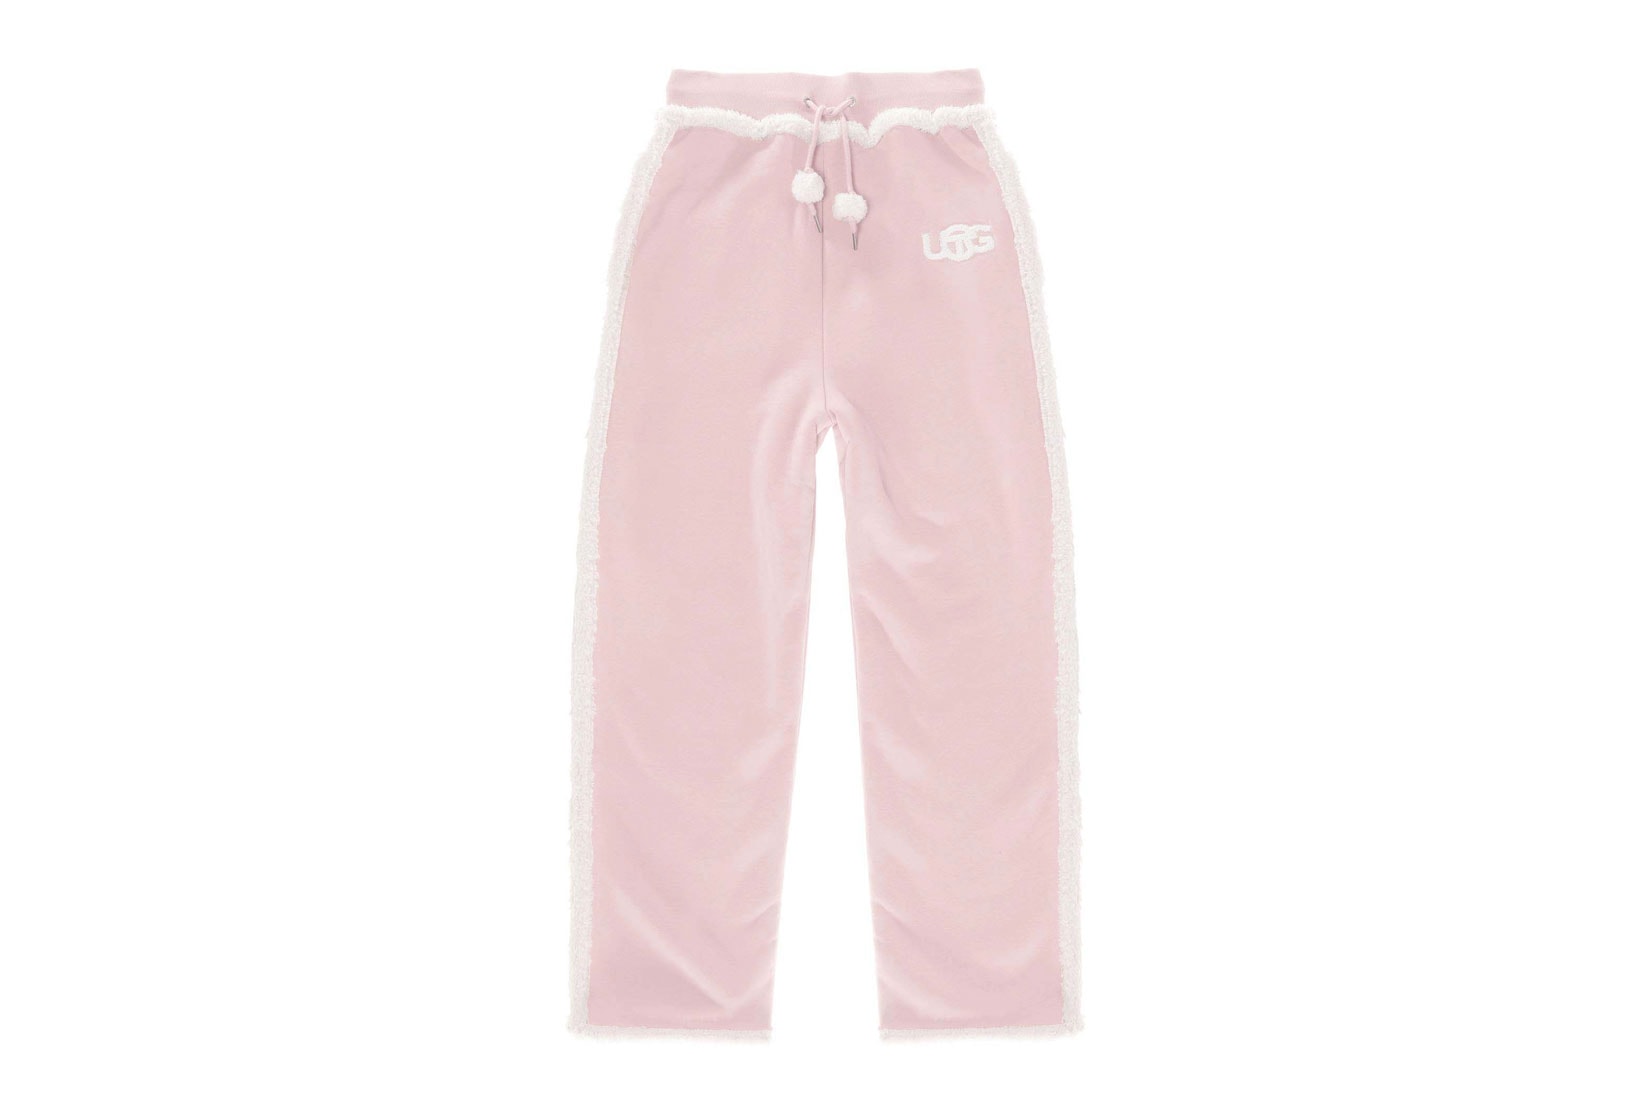 UGG Telfar Fall Winter Collection Pink Shearling Sweatpants